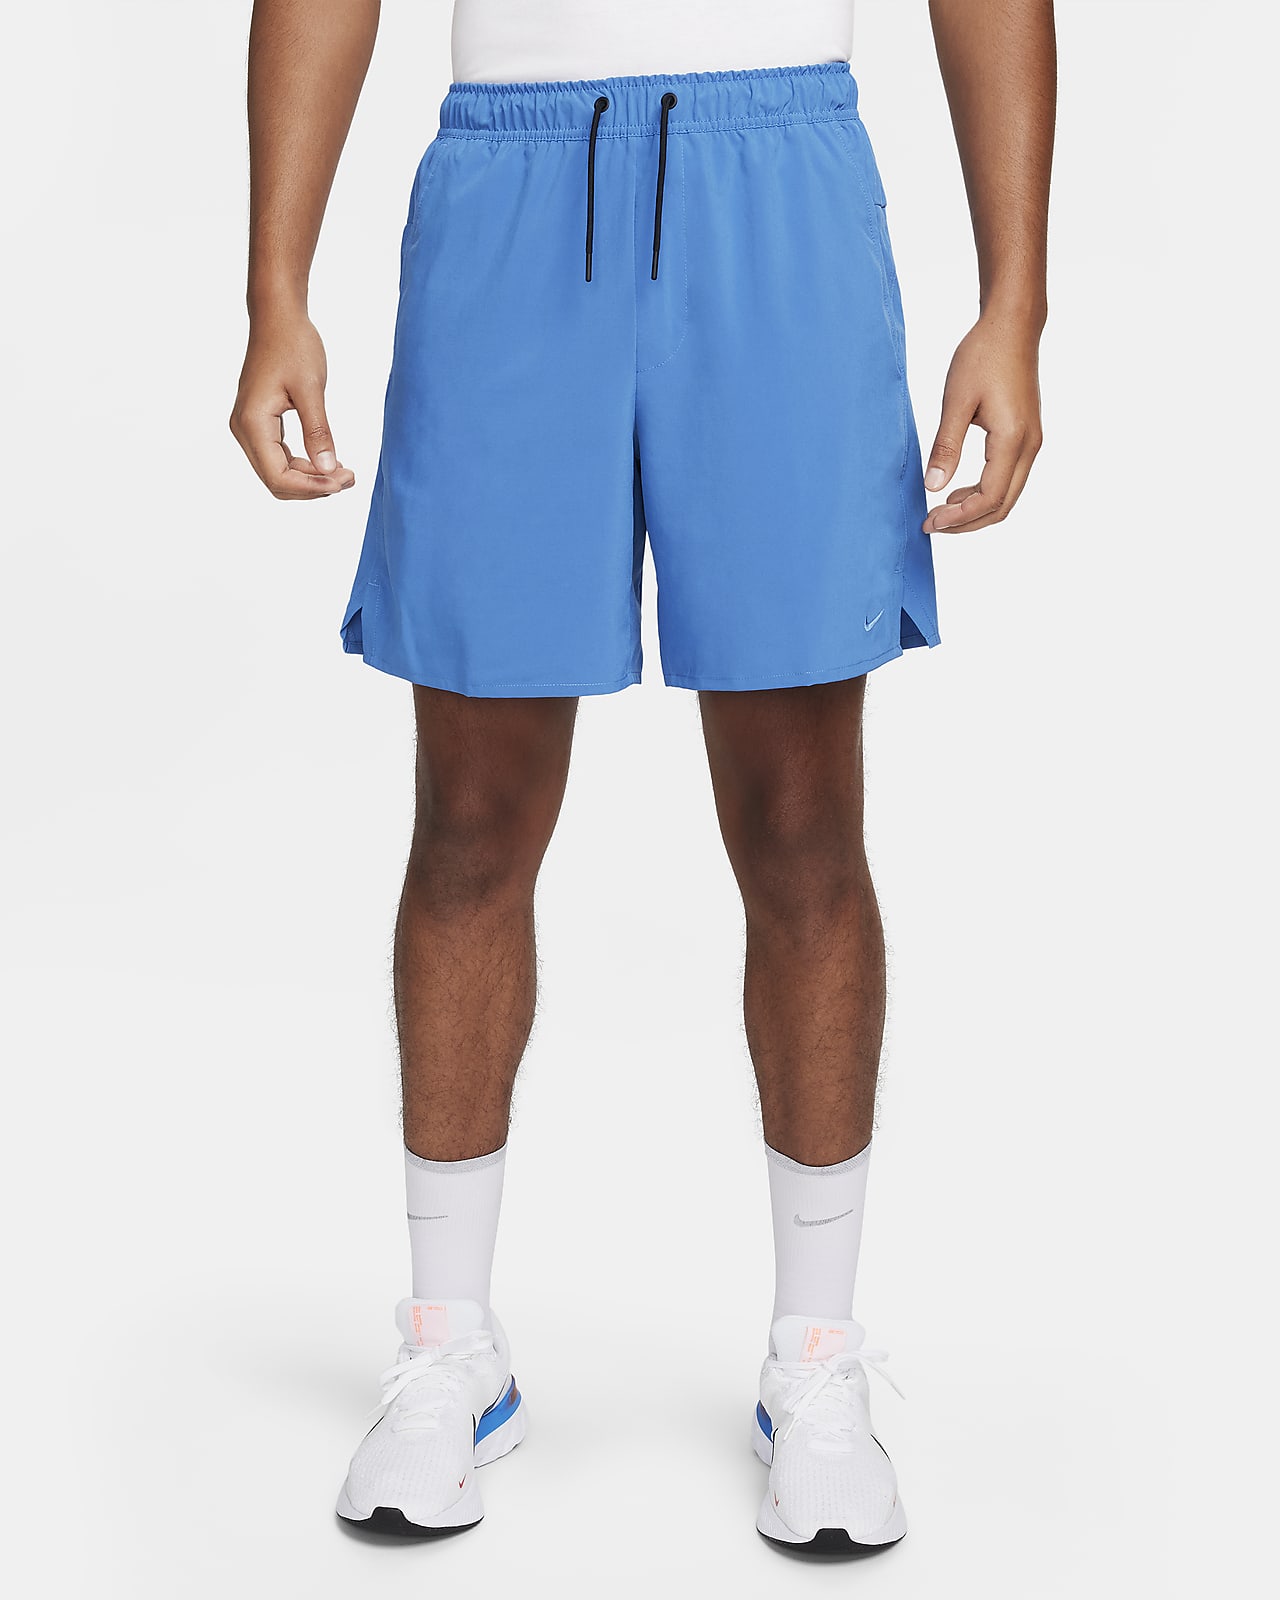 Nike Unlimited vielseitige Dri-FIT Herrenshorts ohne Futter (ca. 18 cm)